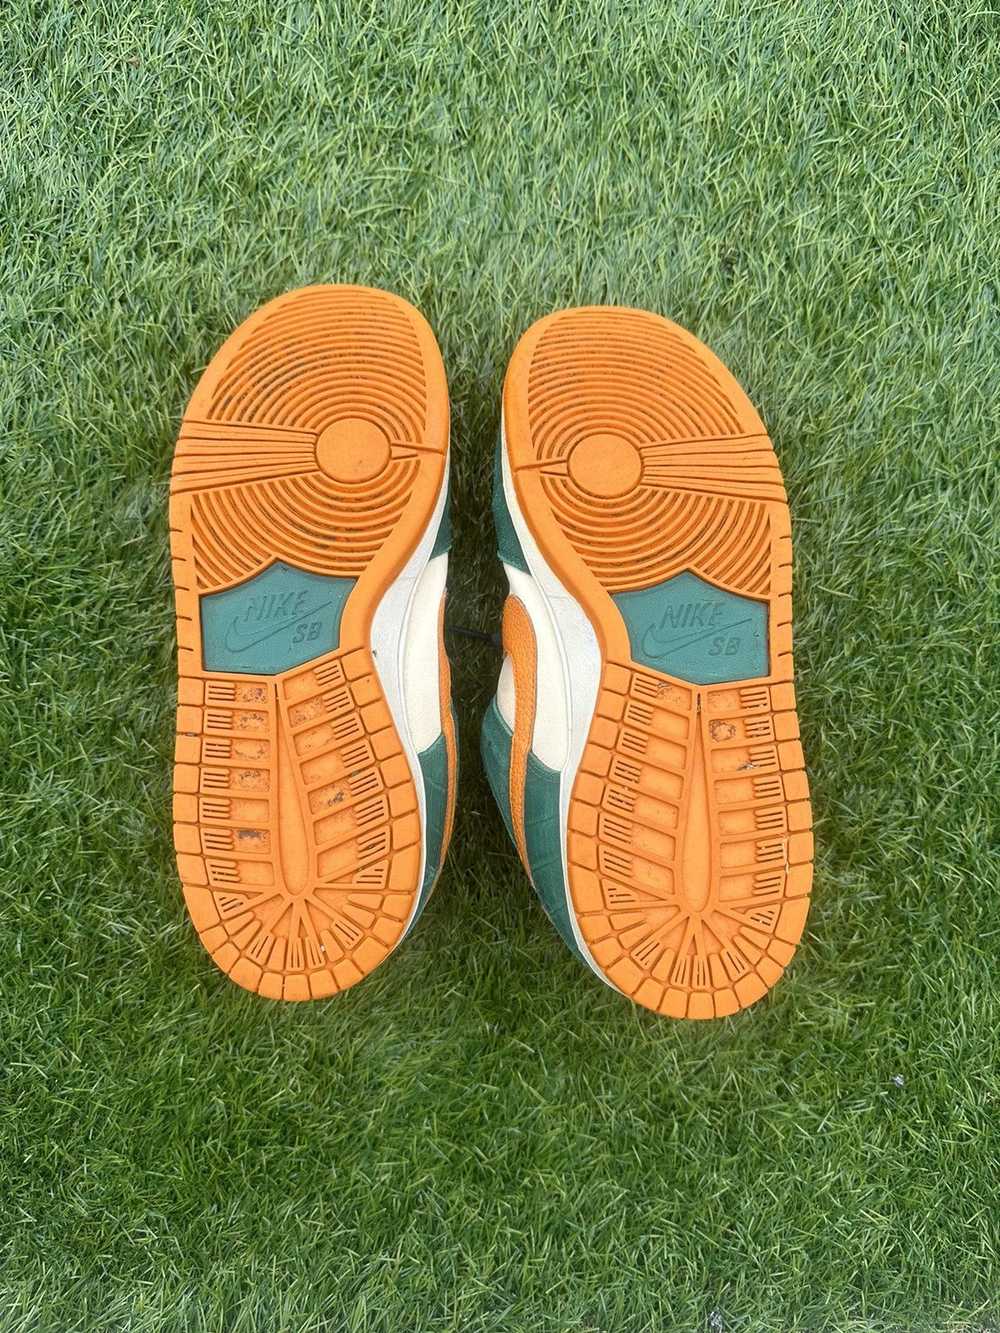 Nike Nike SB Dunk Low “Kumquat” - image 5